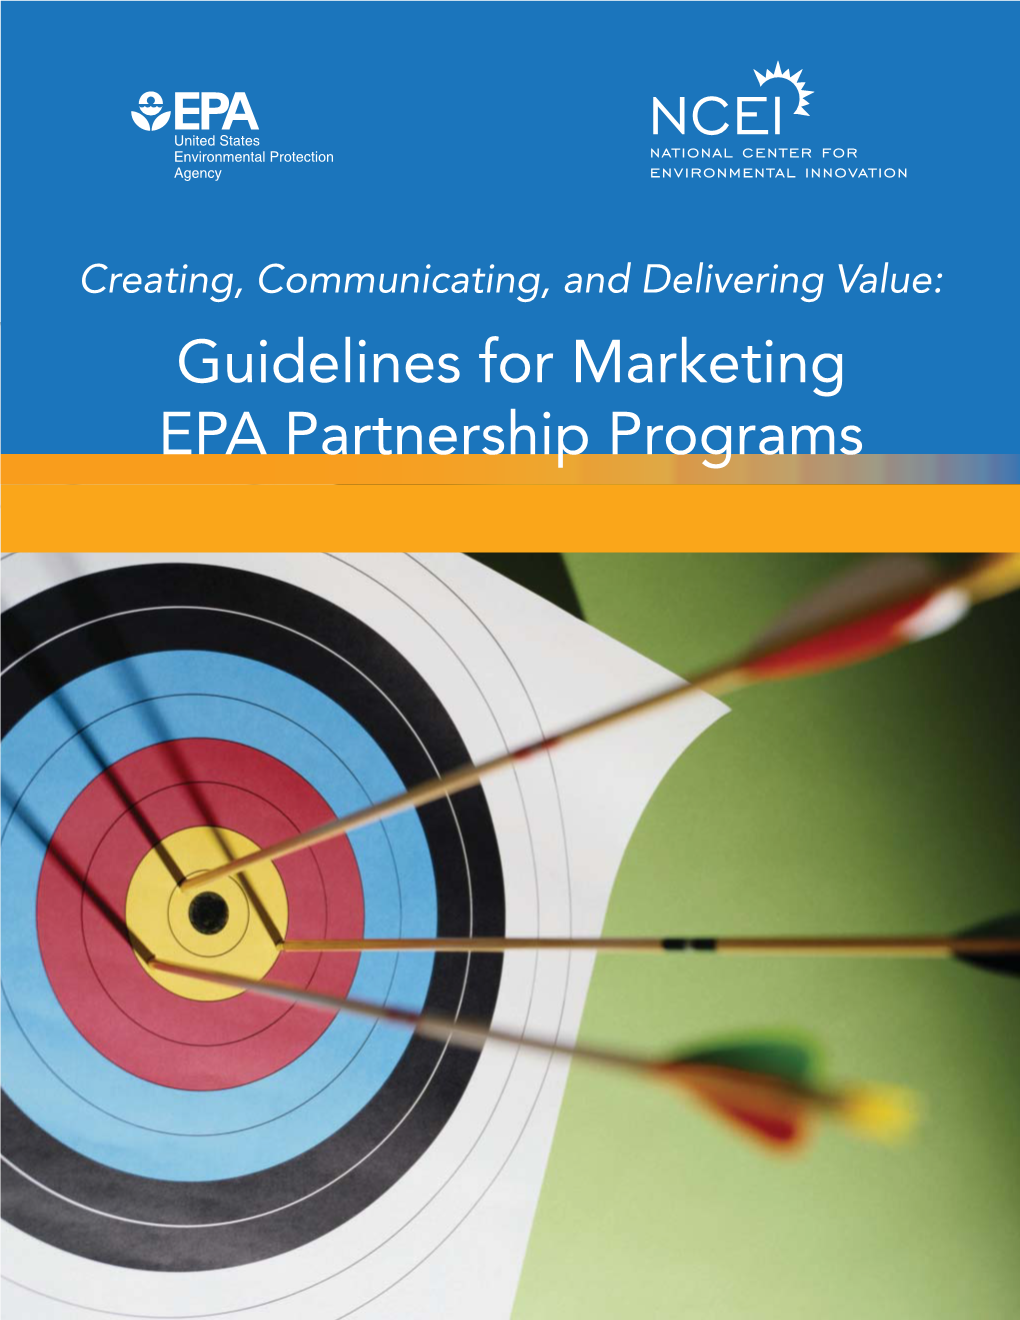 Guidelines for Marketing EPA Partnership Programs